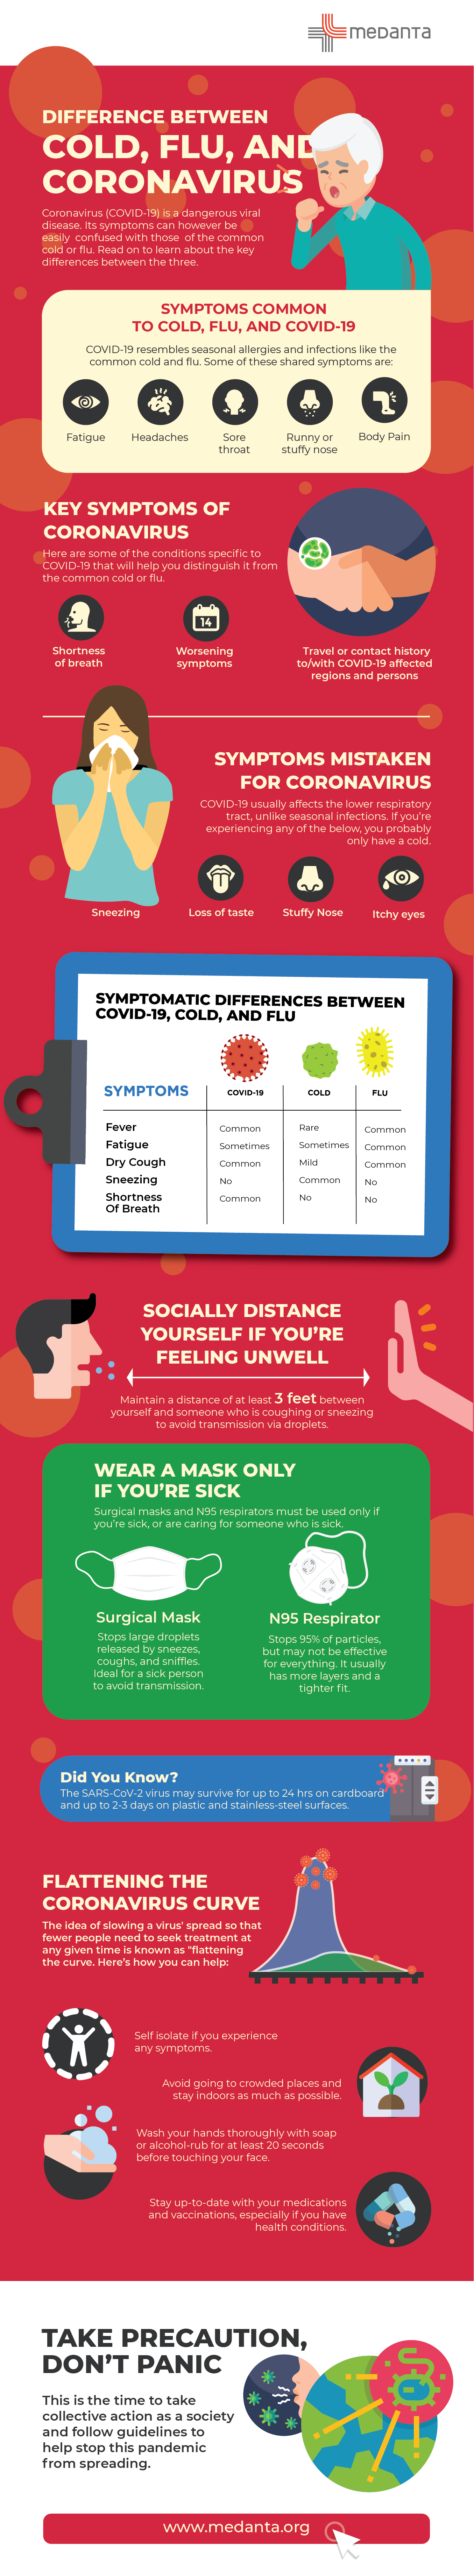 Medanta | Difference Between Common Cold, Flu, and Coronavirus